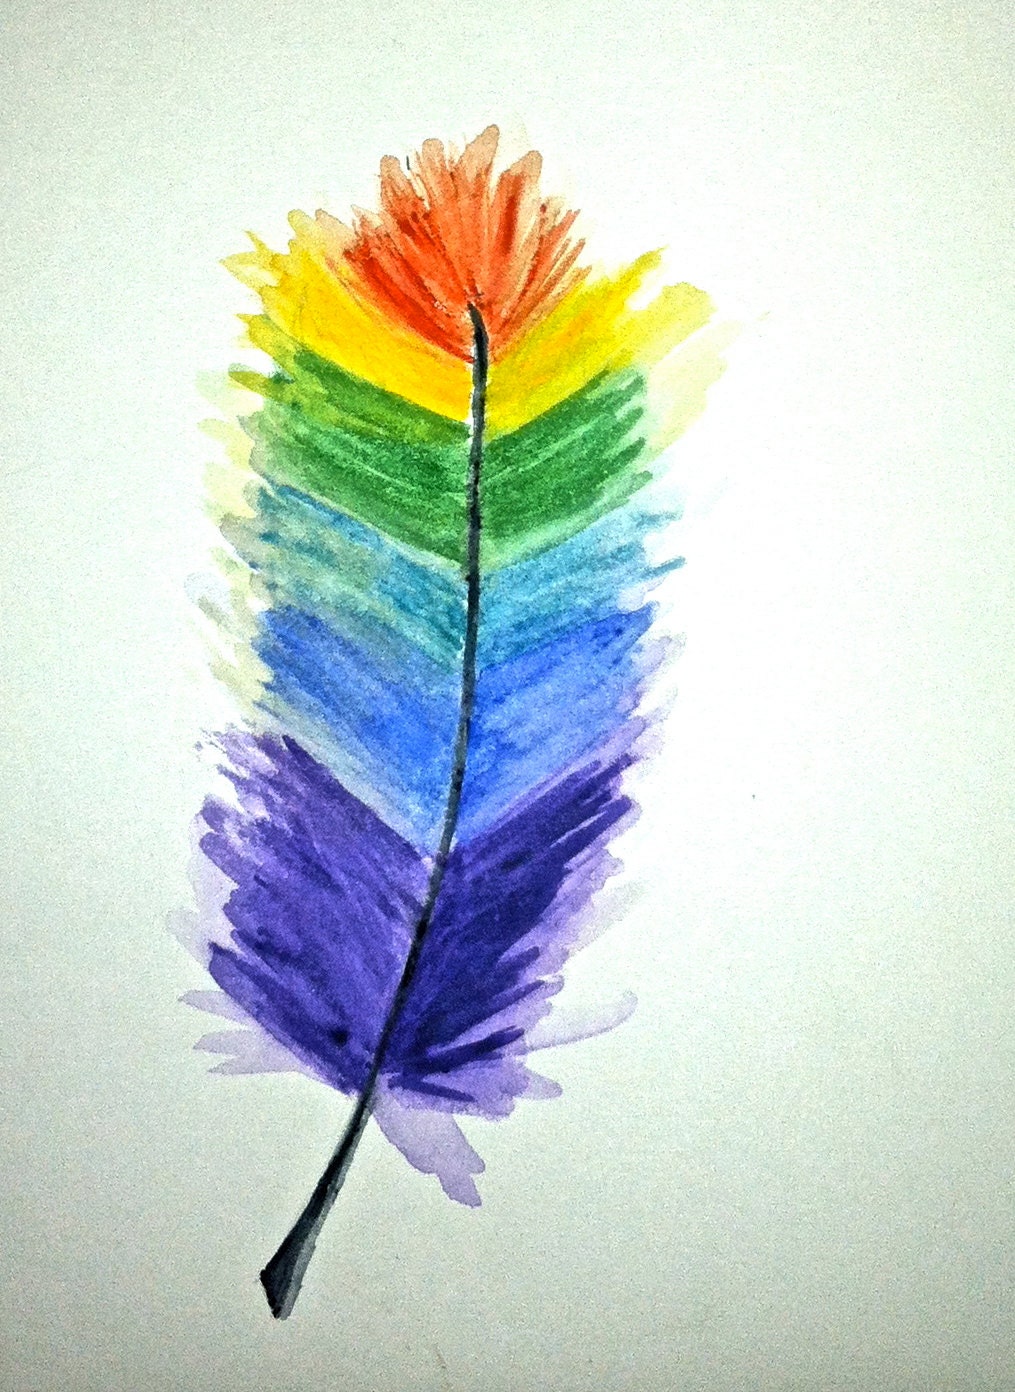 Original Watercolor painting Rainbow Feather 5x7 by Amanda Pennington - PenningtonArt